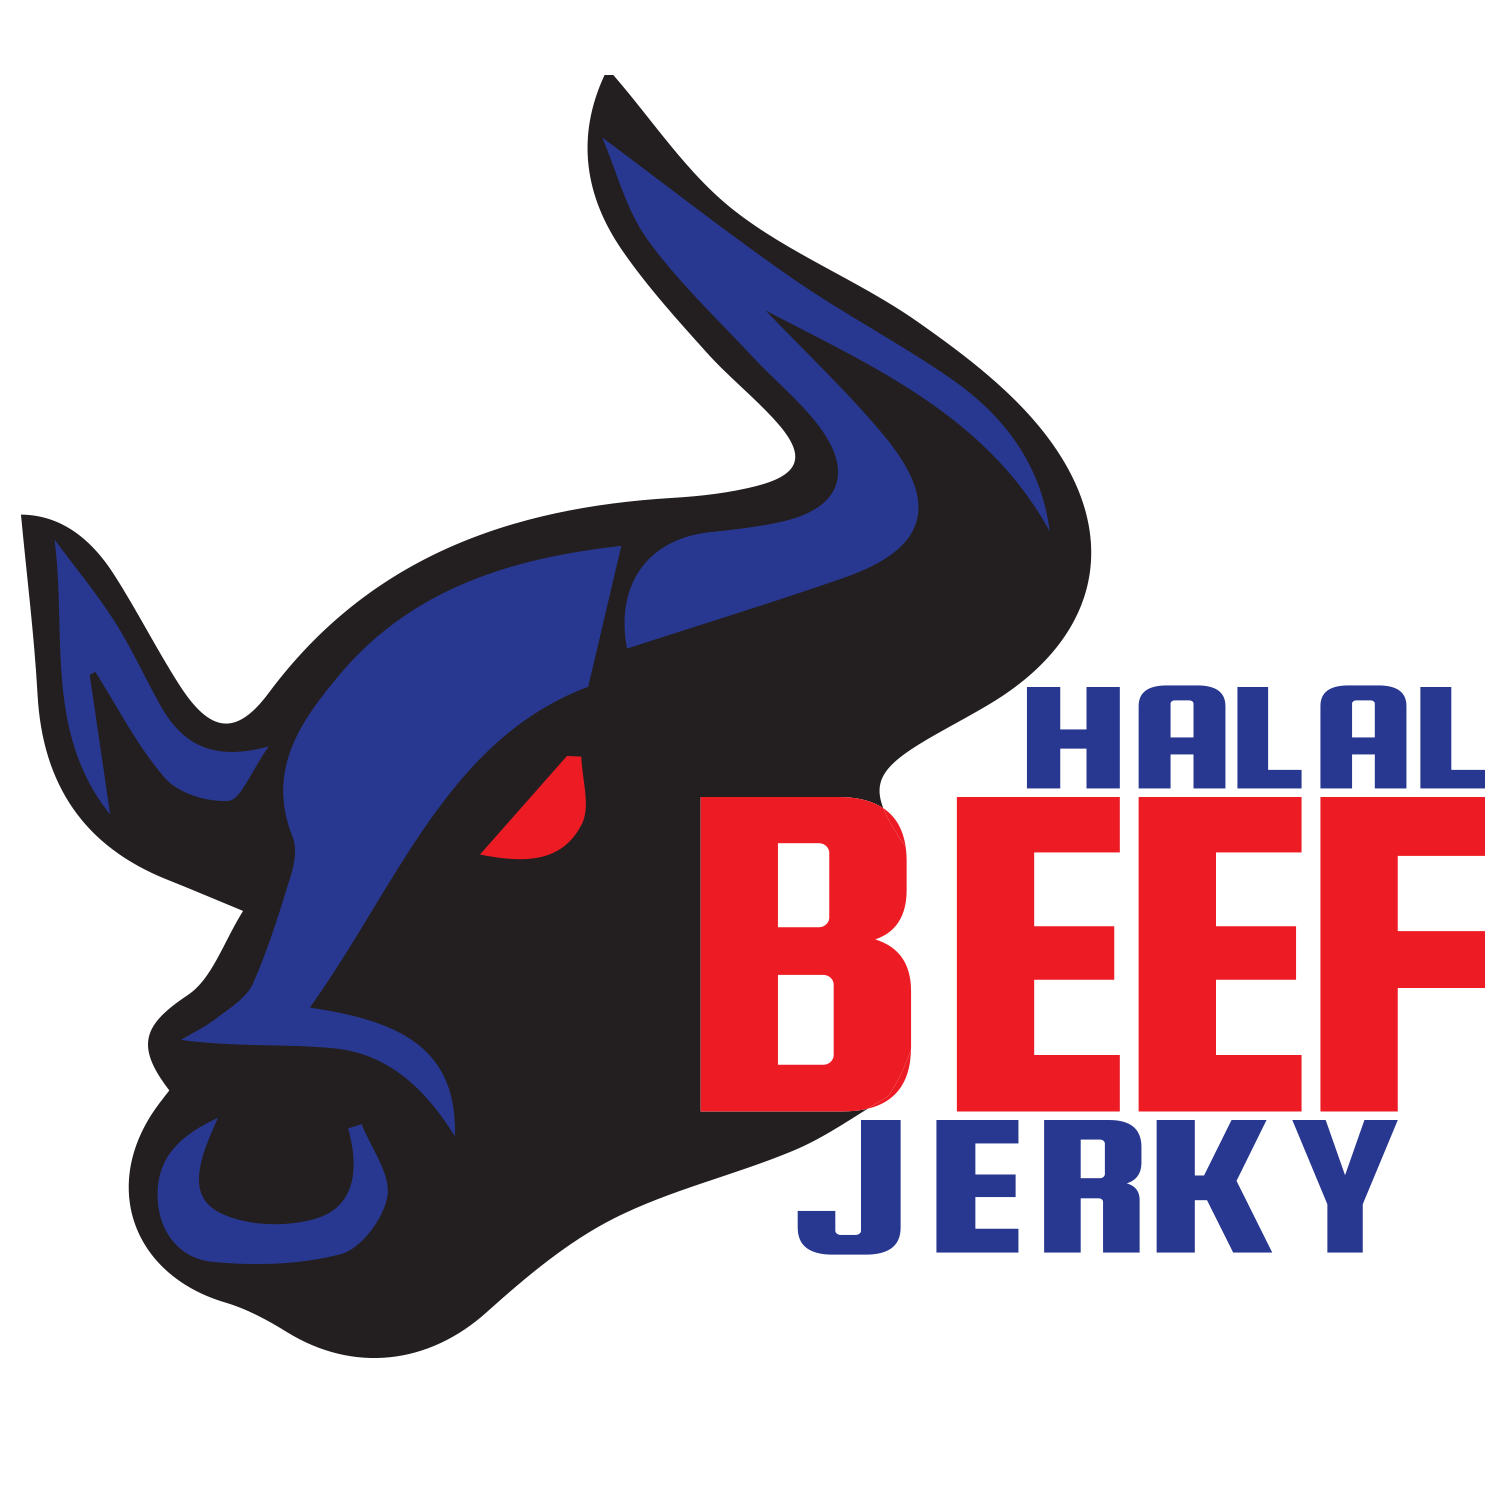 Beef Logo - Beef logo 1 by shuvo khan on Dribbble